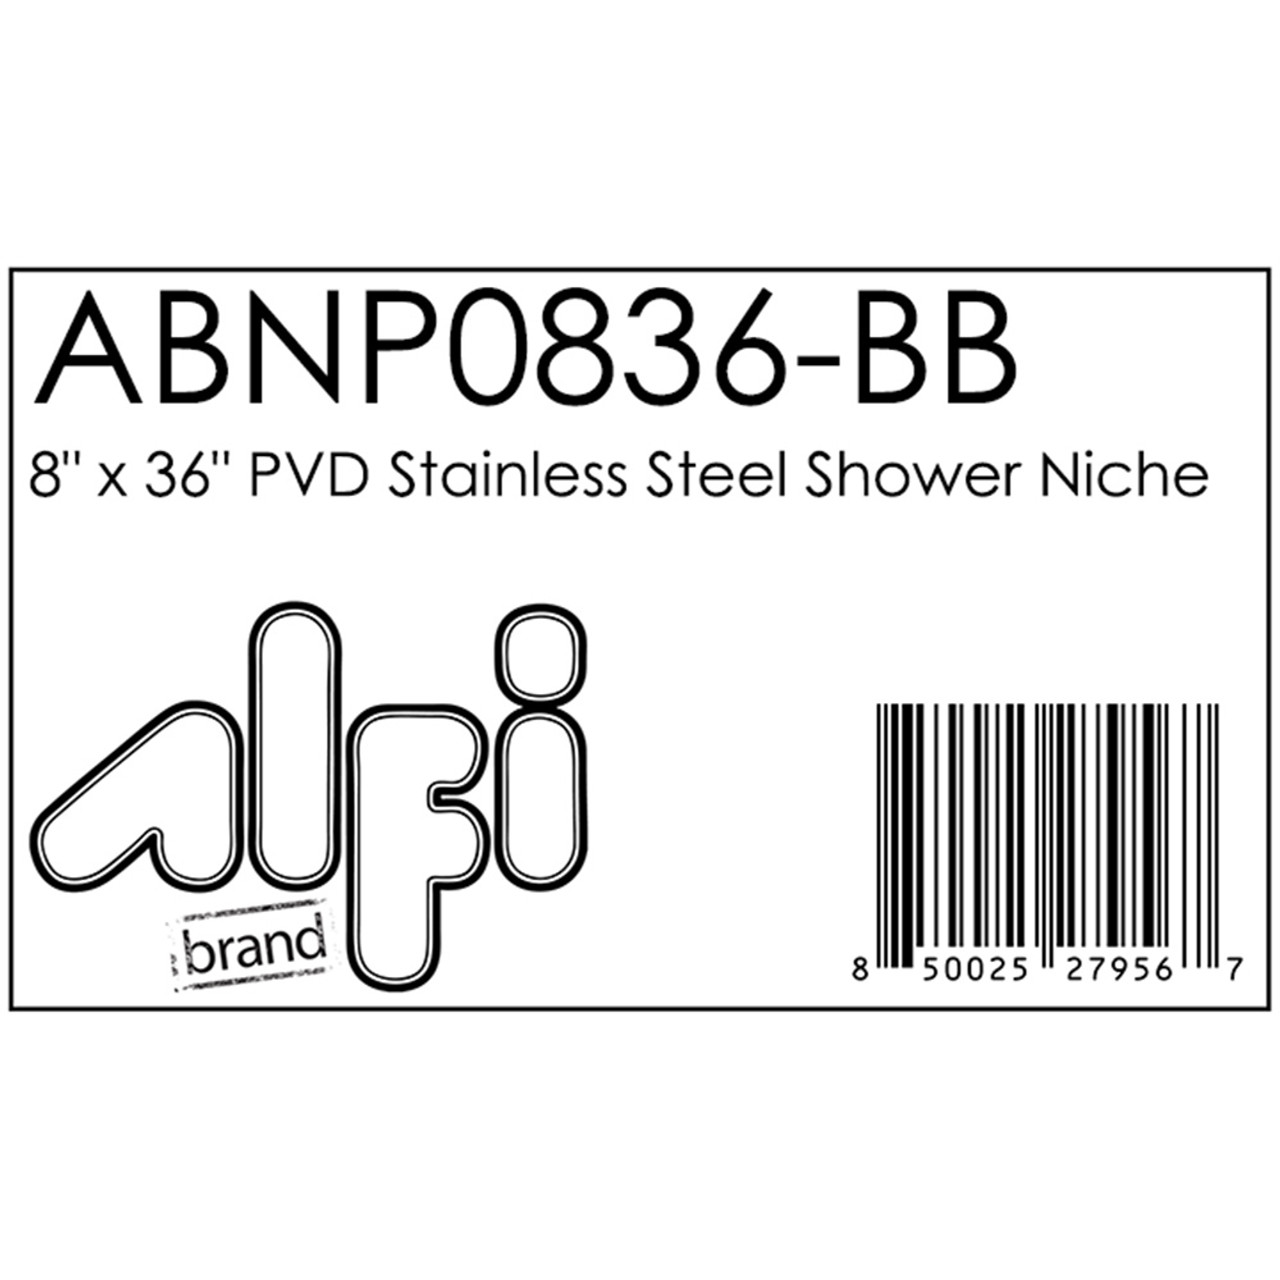 ALFI ALFI brand 8 x 36 Polished Stainless Steel Vertical Triple